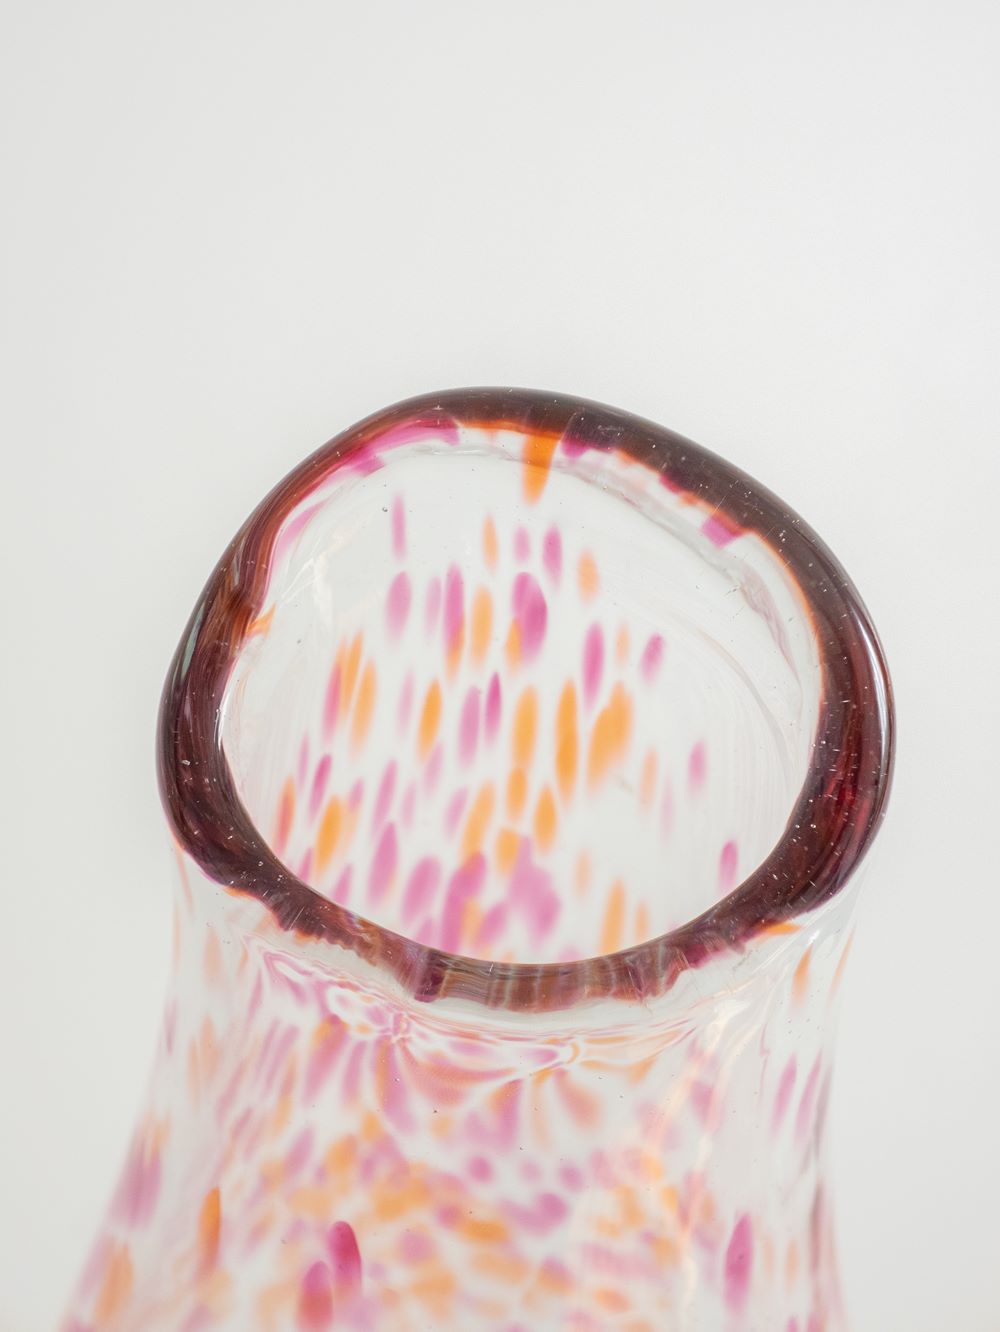 Les vases en verre souffle de Catarina Nogueira Pacheco©xavierguerra